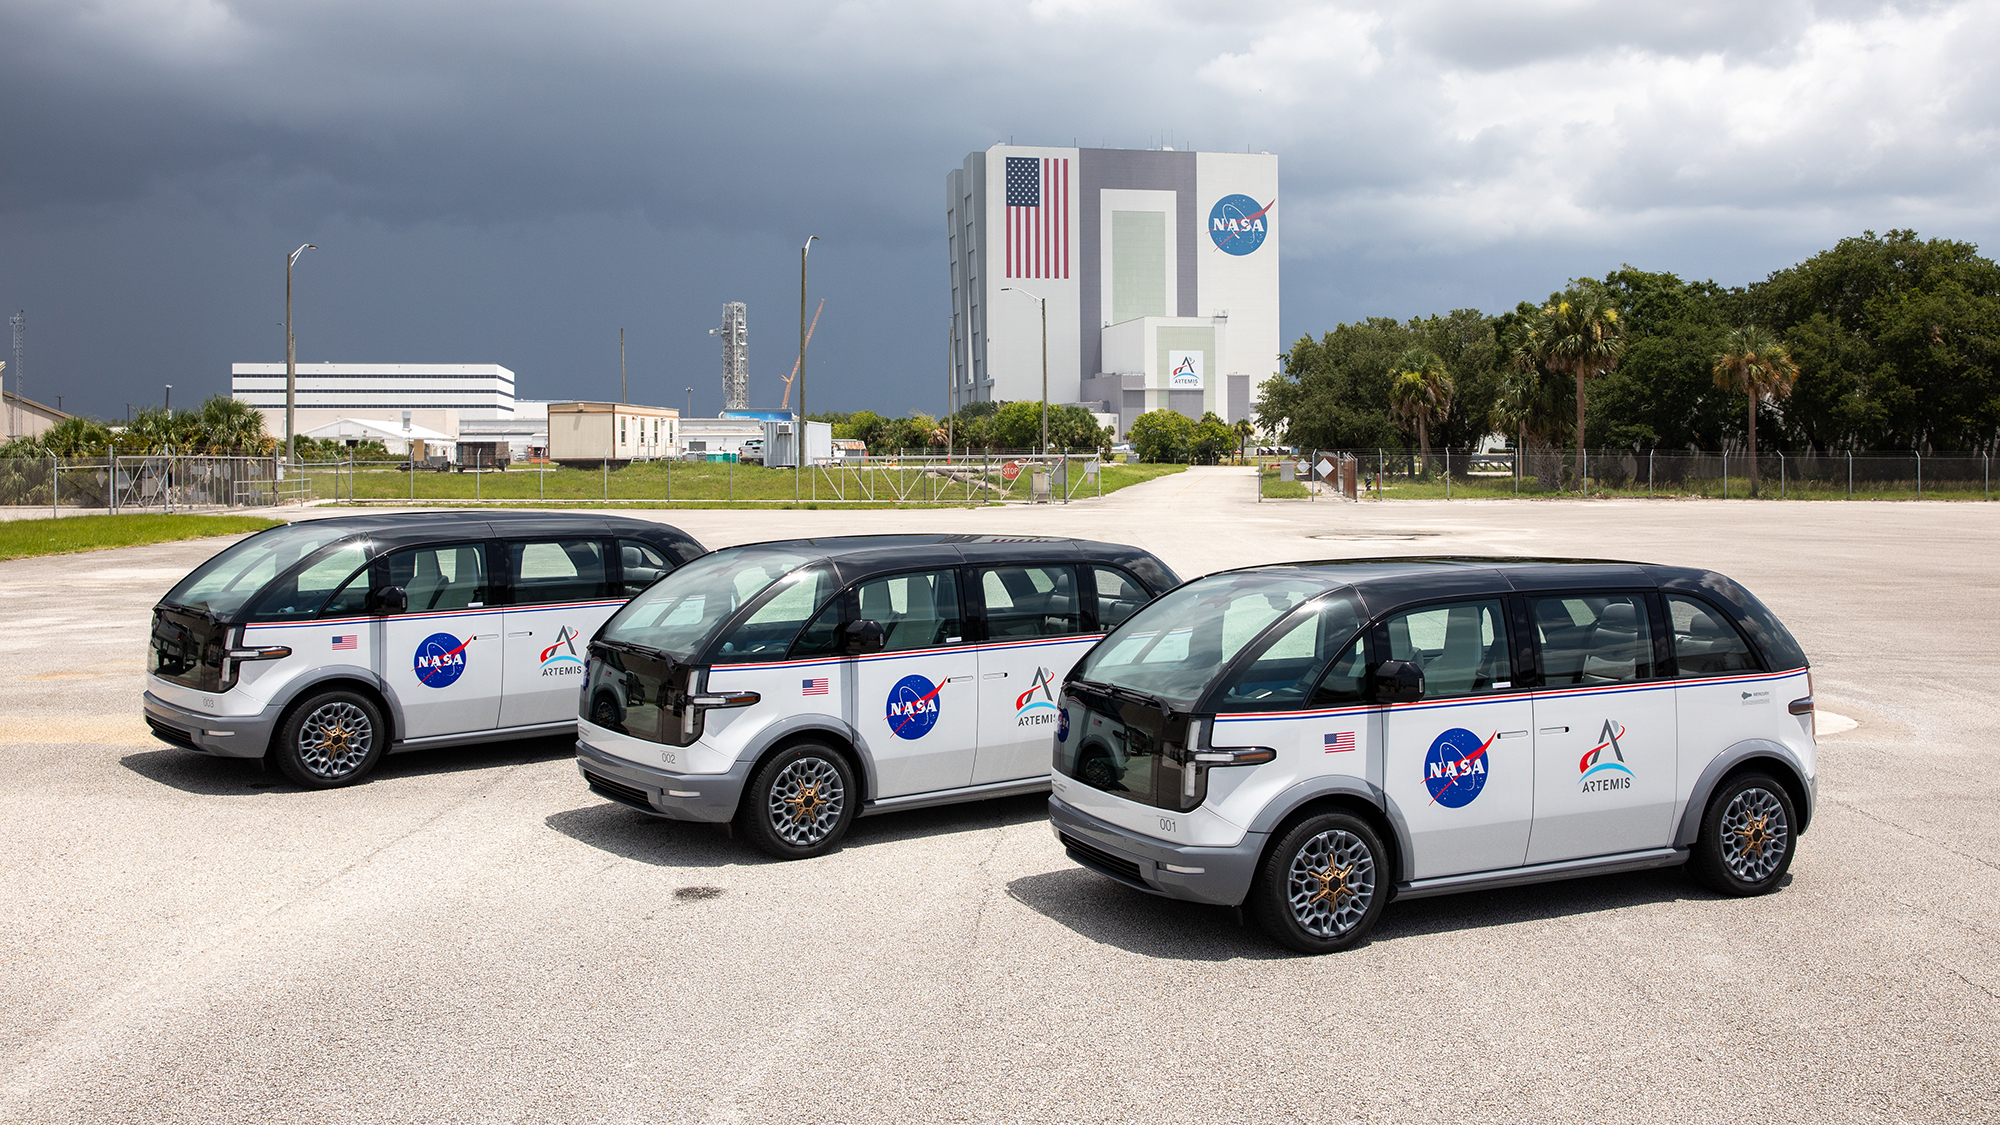 Check out NASA’s fun new electric vans